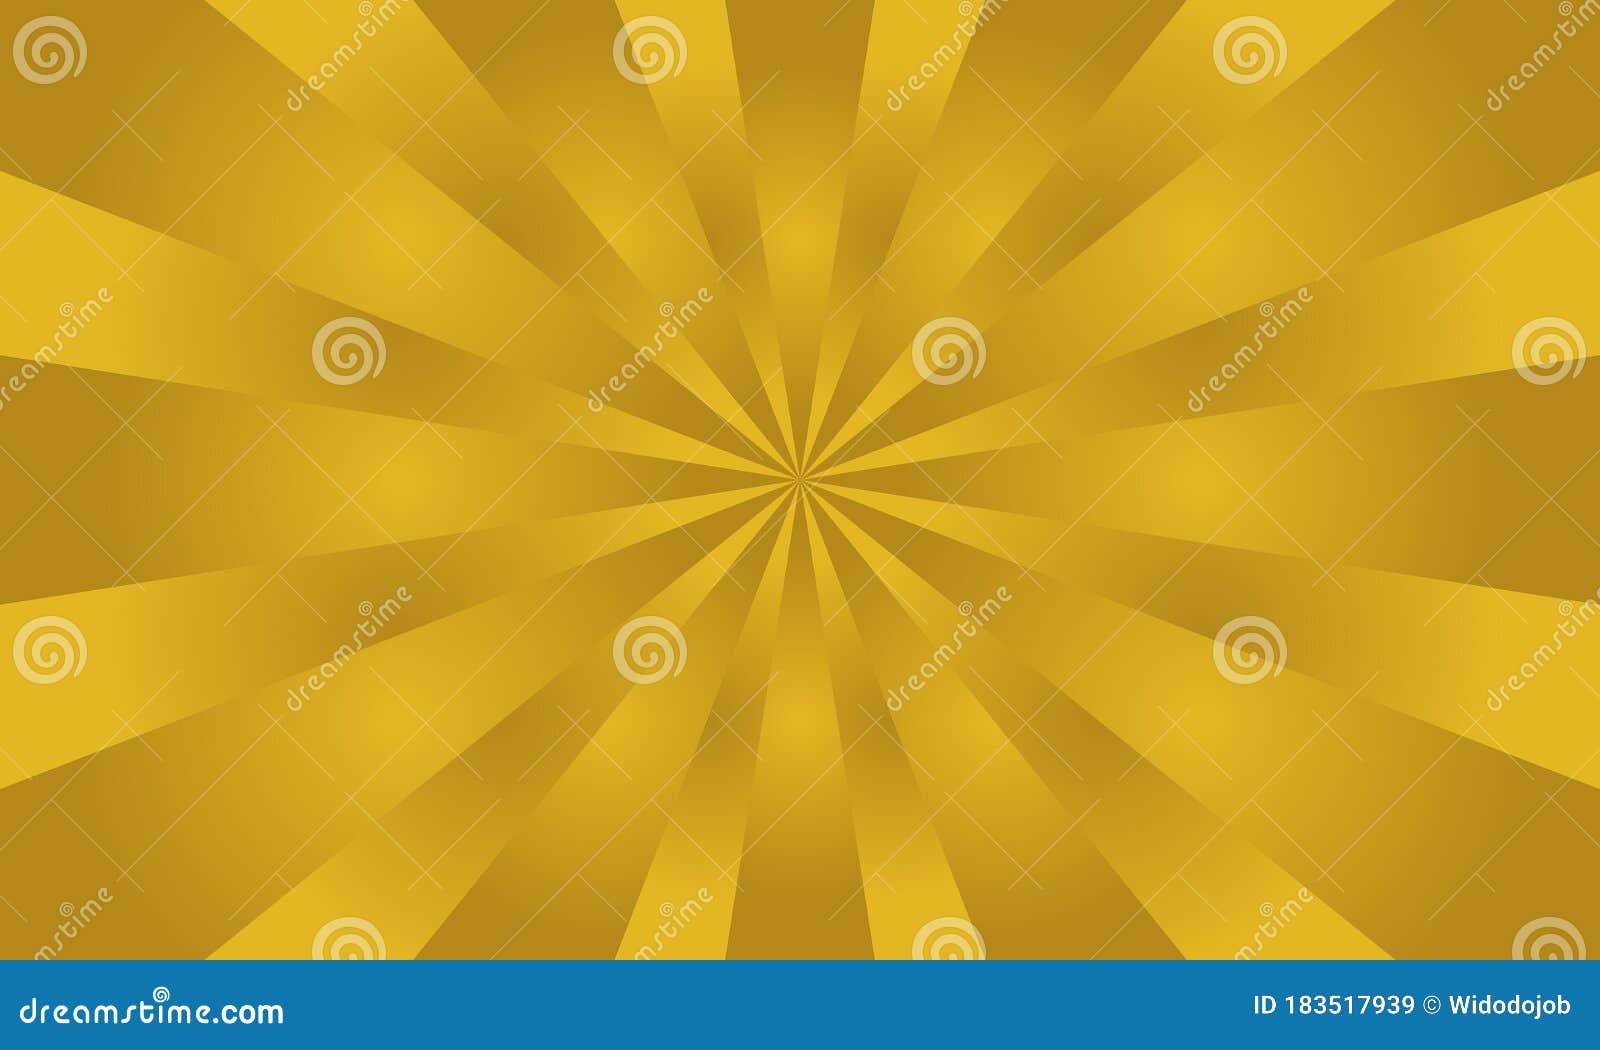 httpsgold starburst background vector illustration gold starburst background image183517939